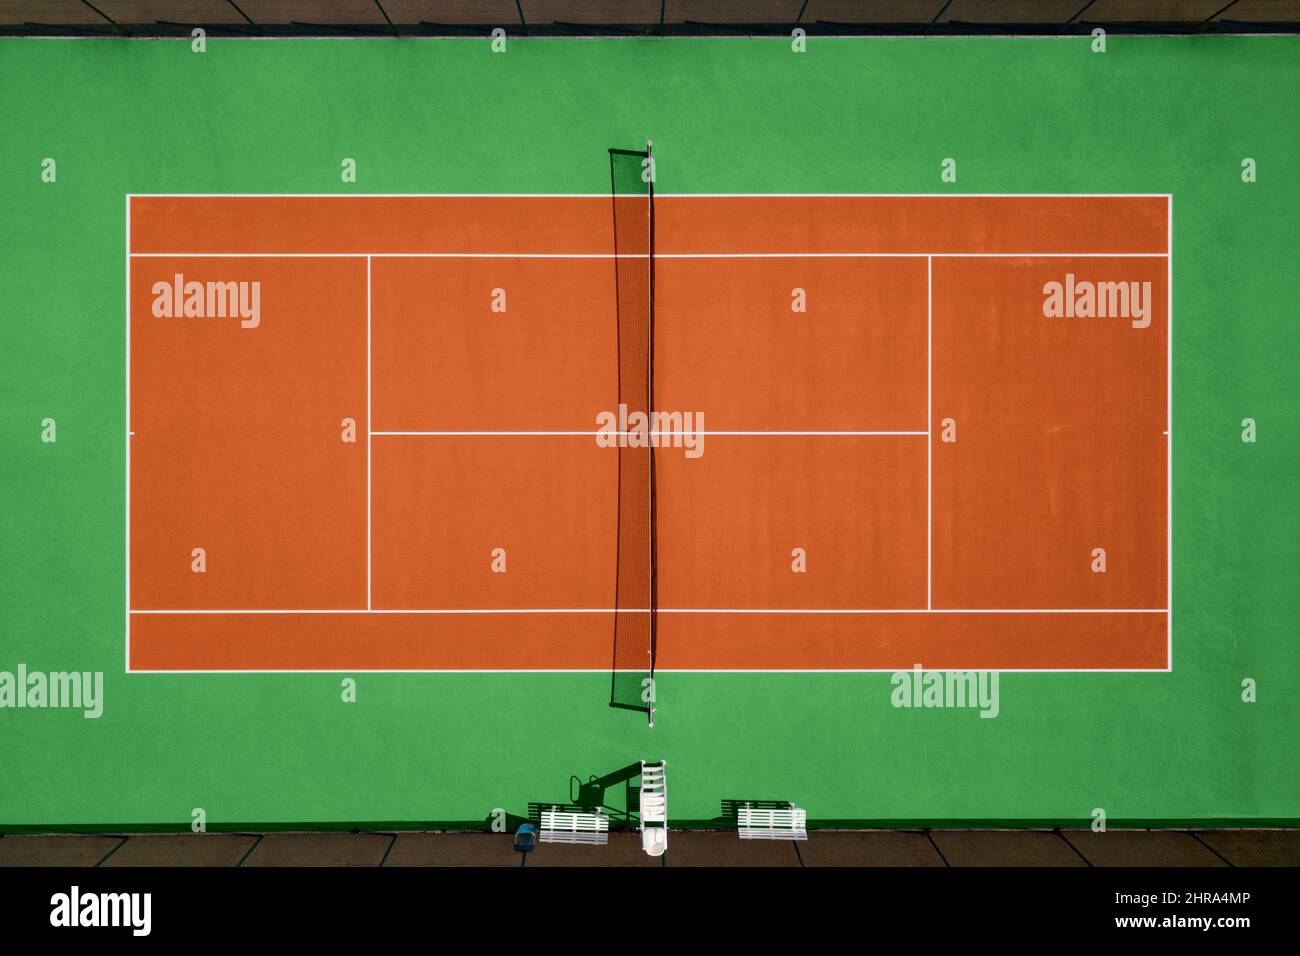 Vista aérea de la pista de tenis naranja y verde. Foto de stock